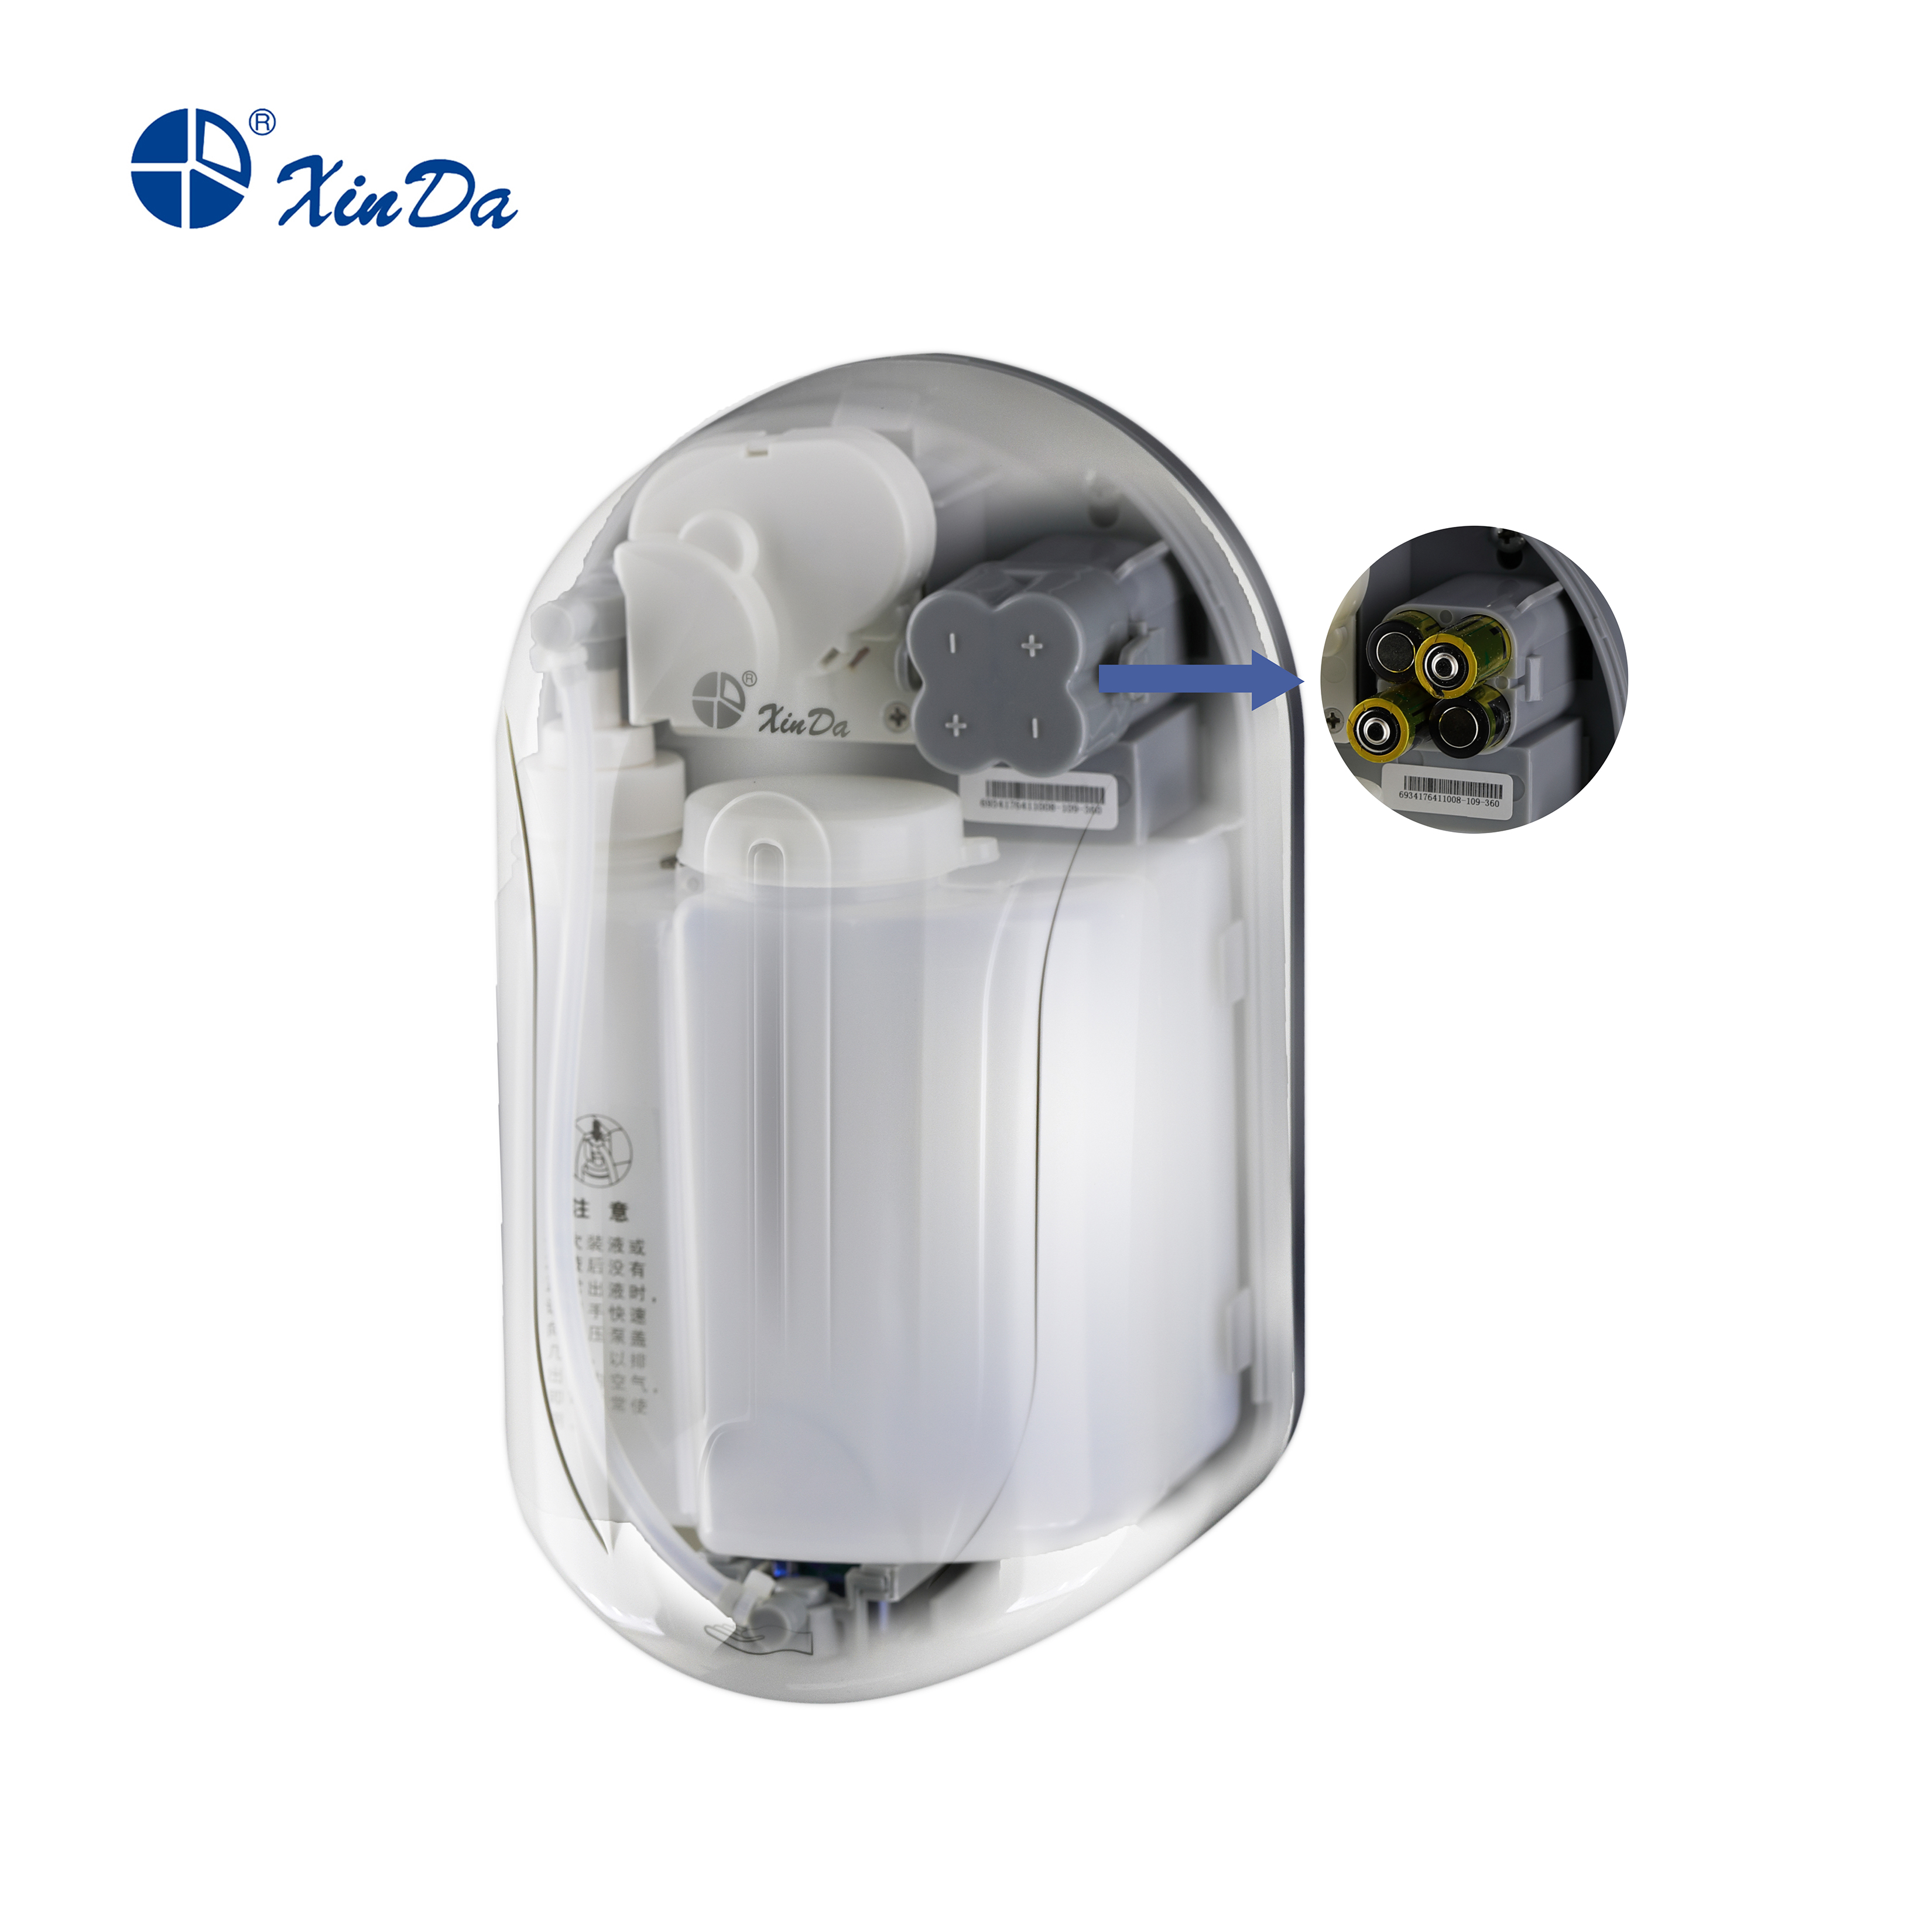 The XinDa ZYQ110 Low Price Wholesale Spray Drip Foaming ABS Plastic Liquid Automatic Soap Dispenser